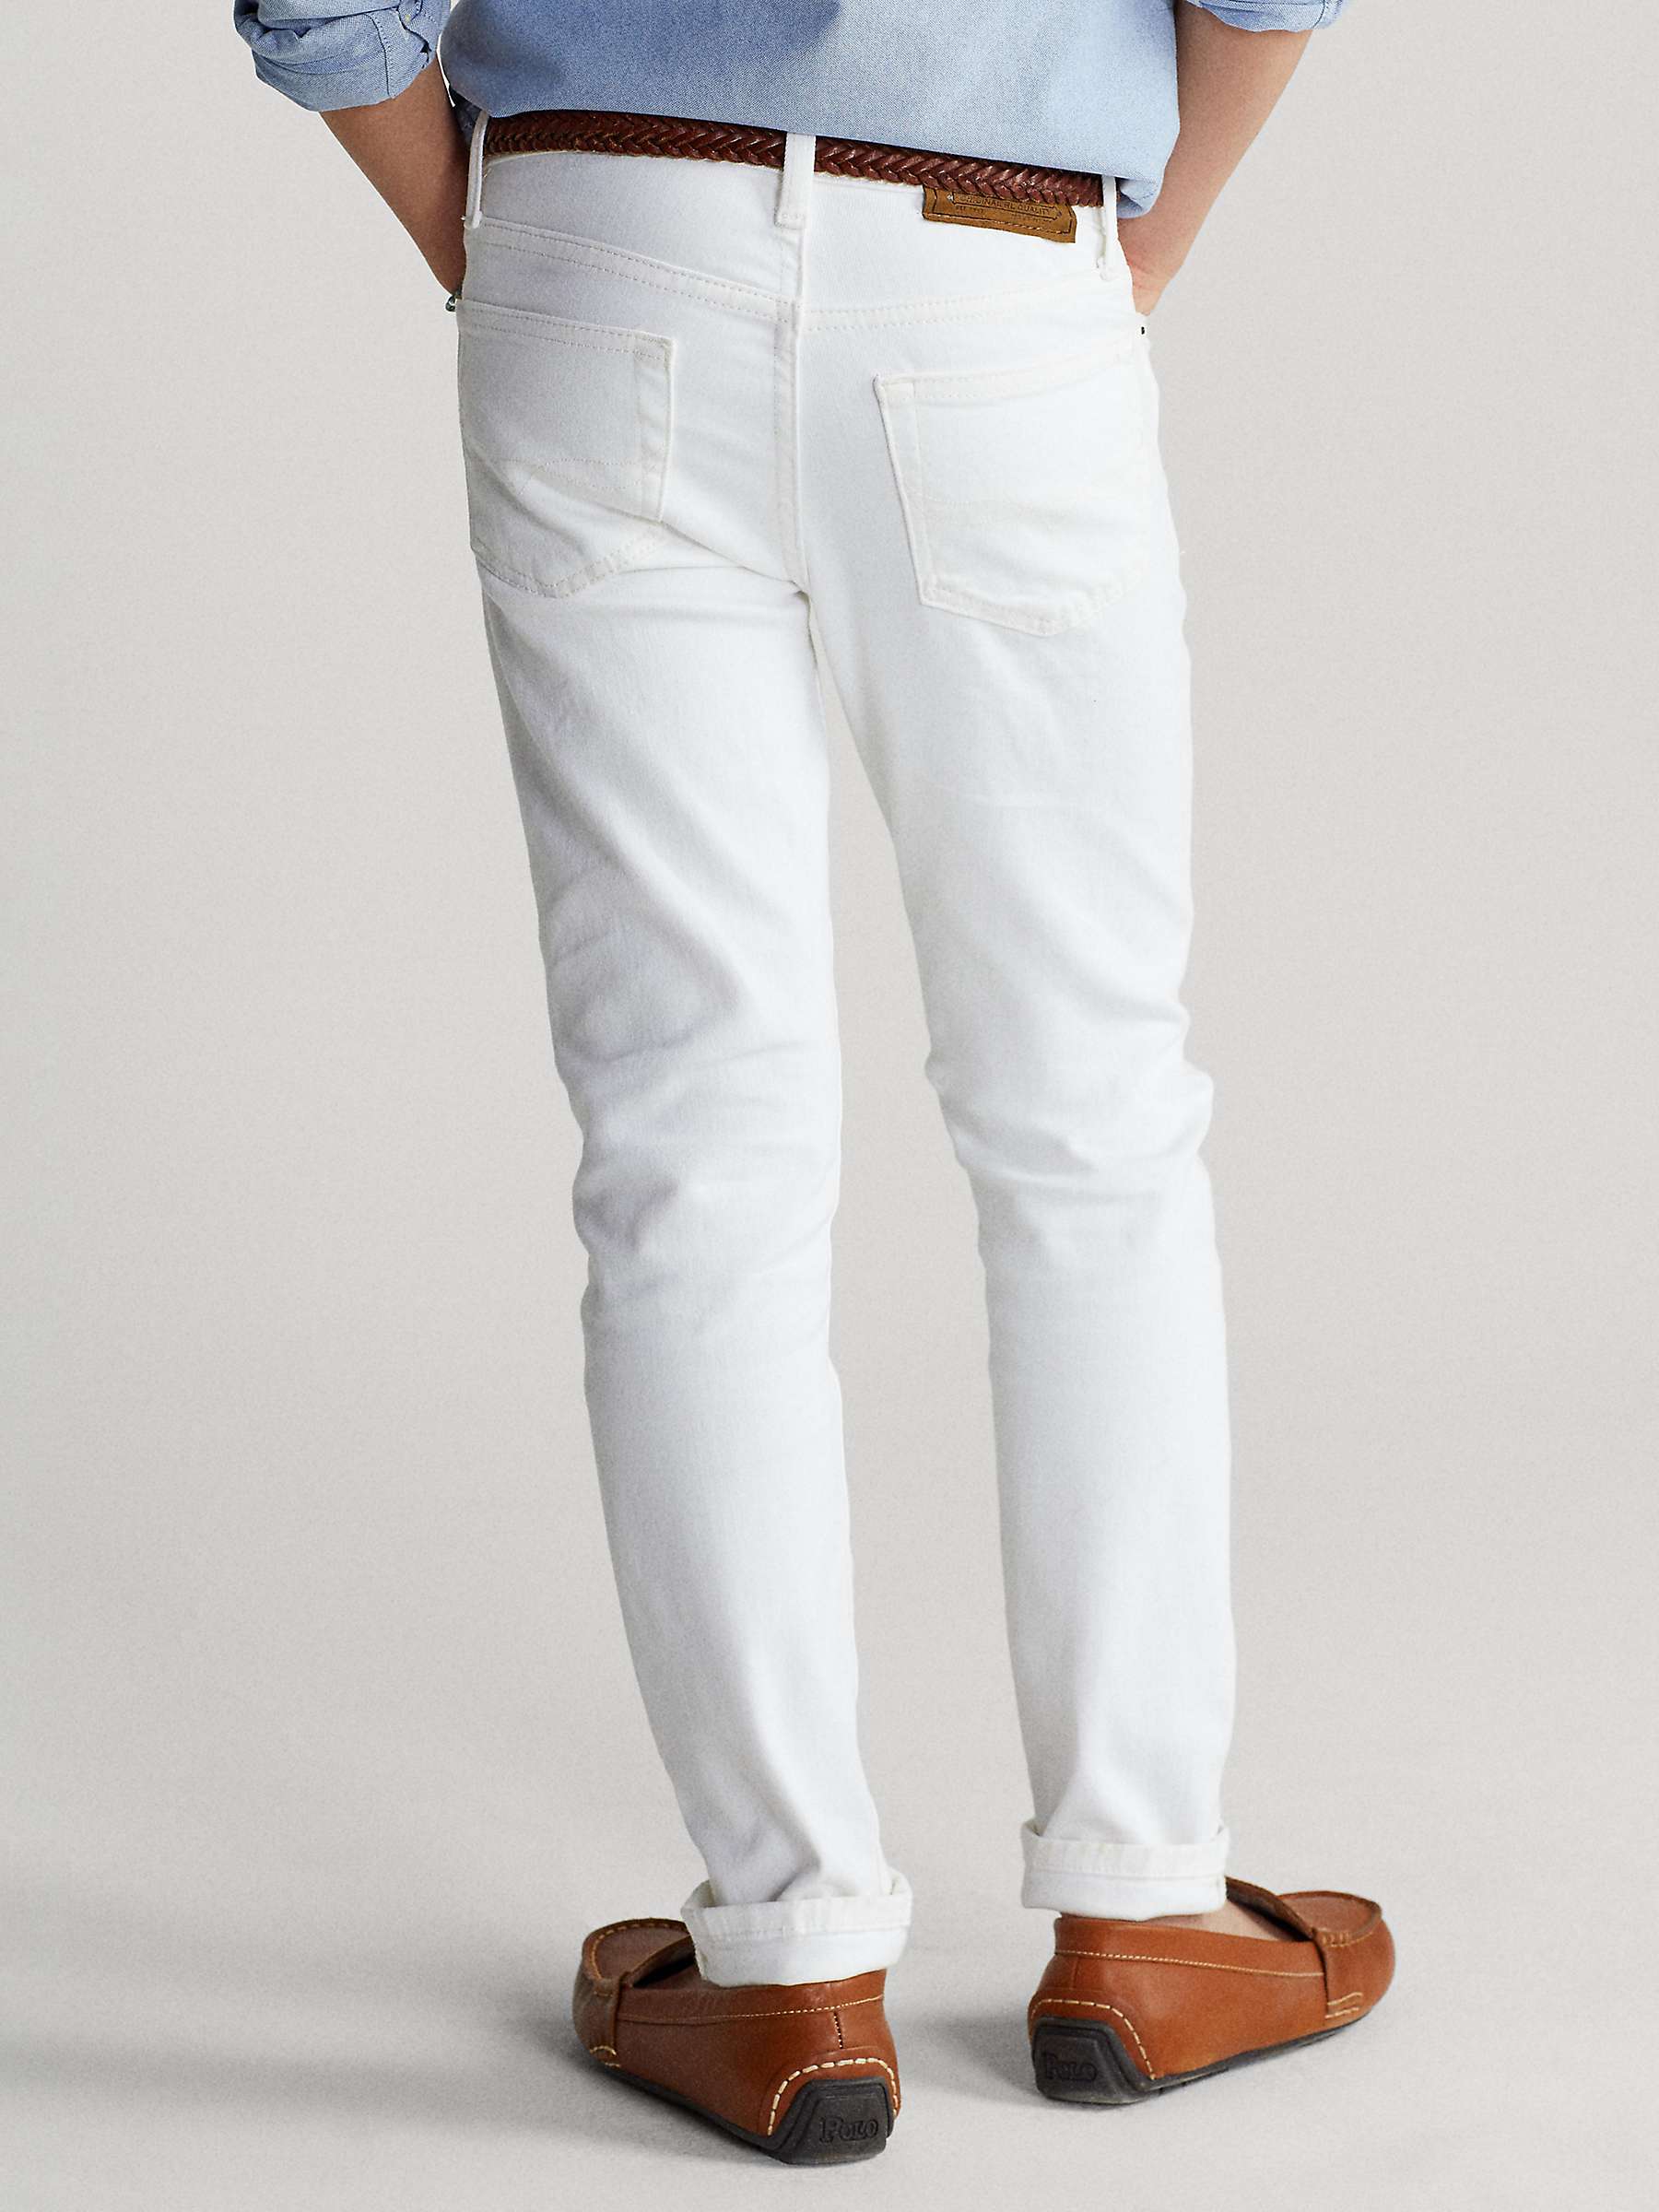 Buy Ralph Lauren Kids' Sullivan Slim Fit Stretch Jeans, Cohen White Online at johnlewis.com